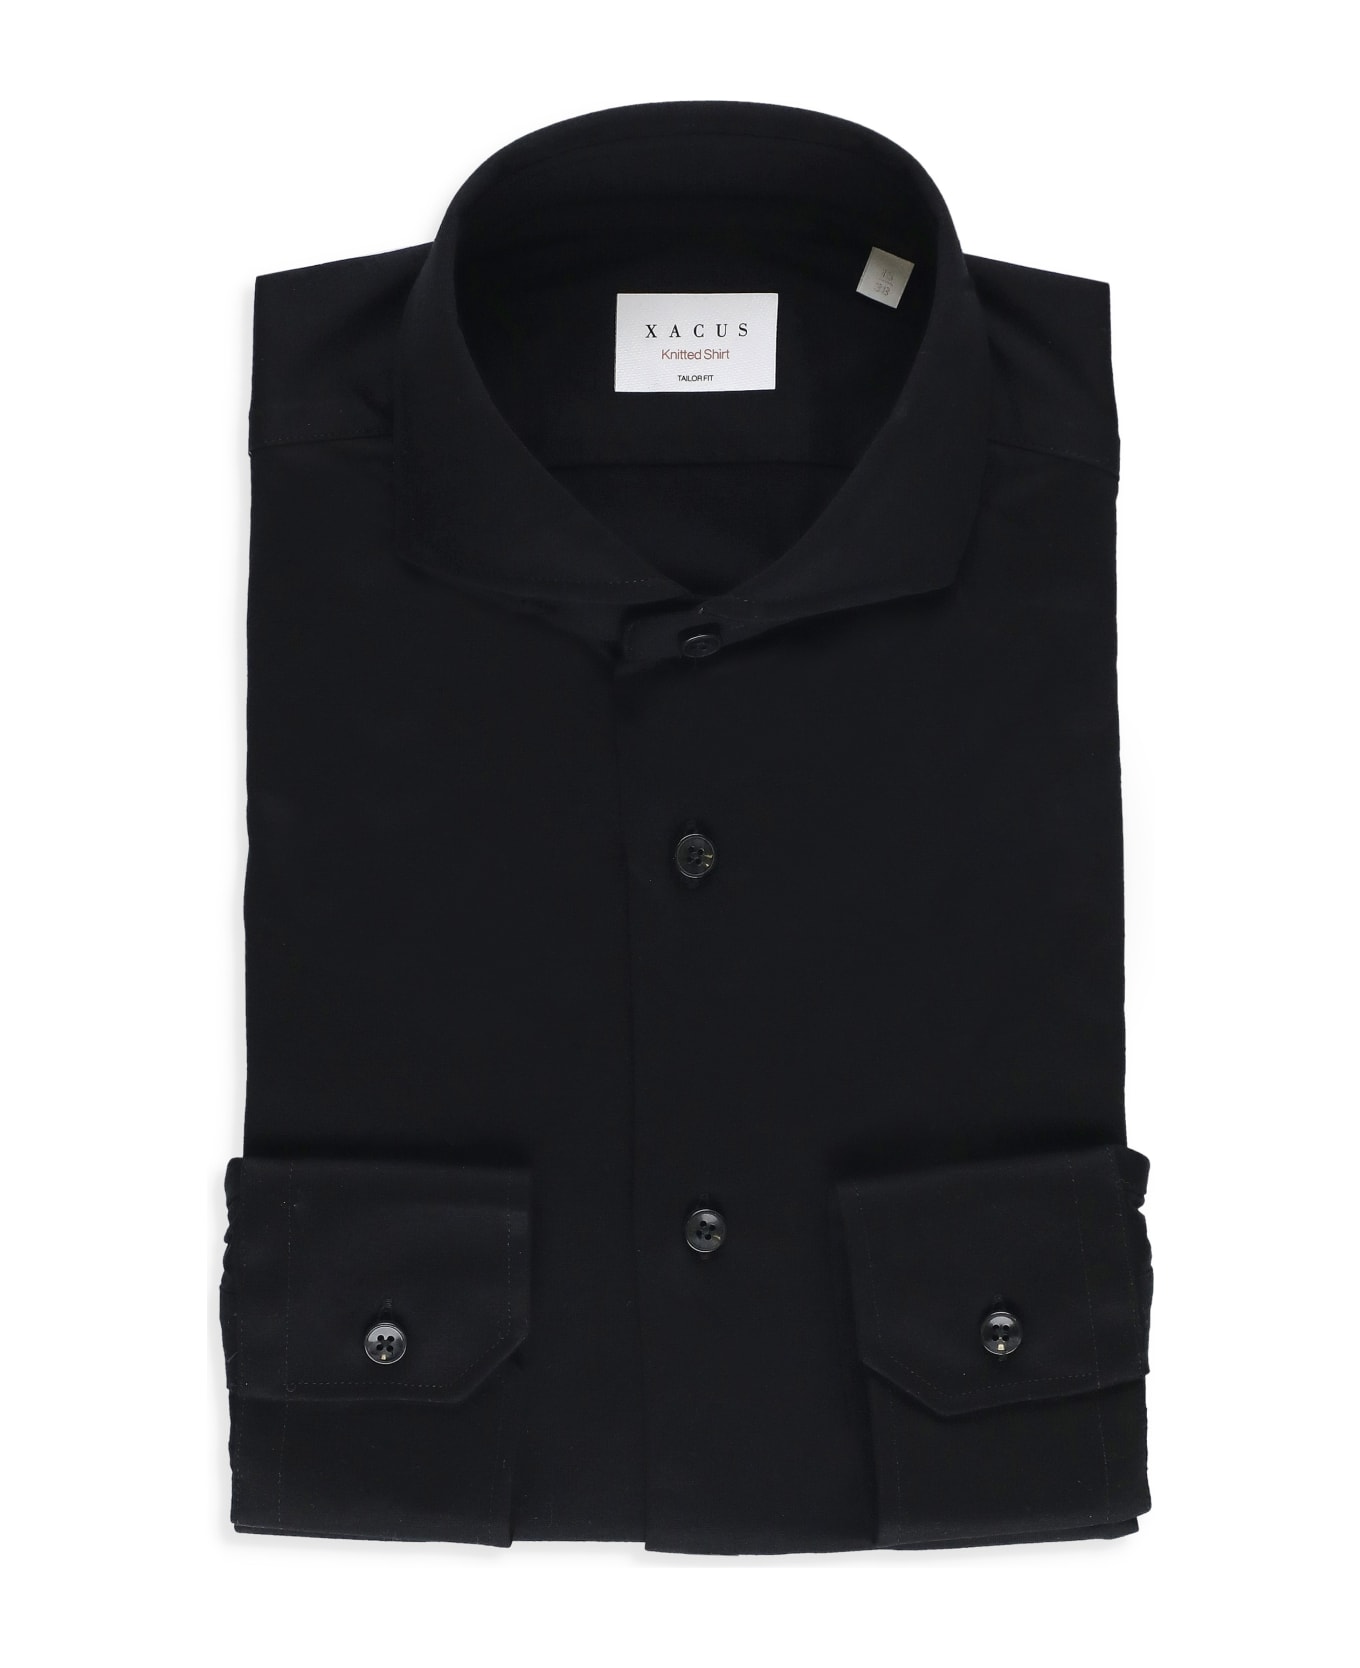 Xacus Knitted Shirt - Black シャツ